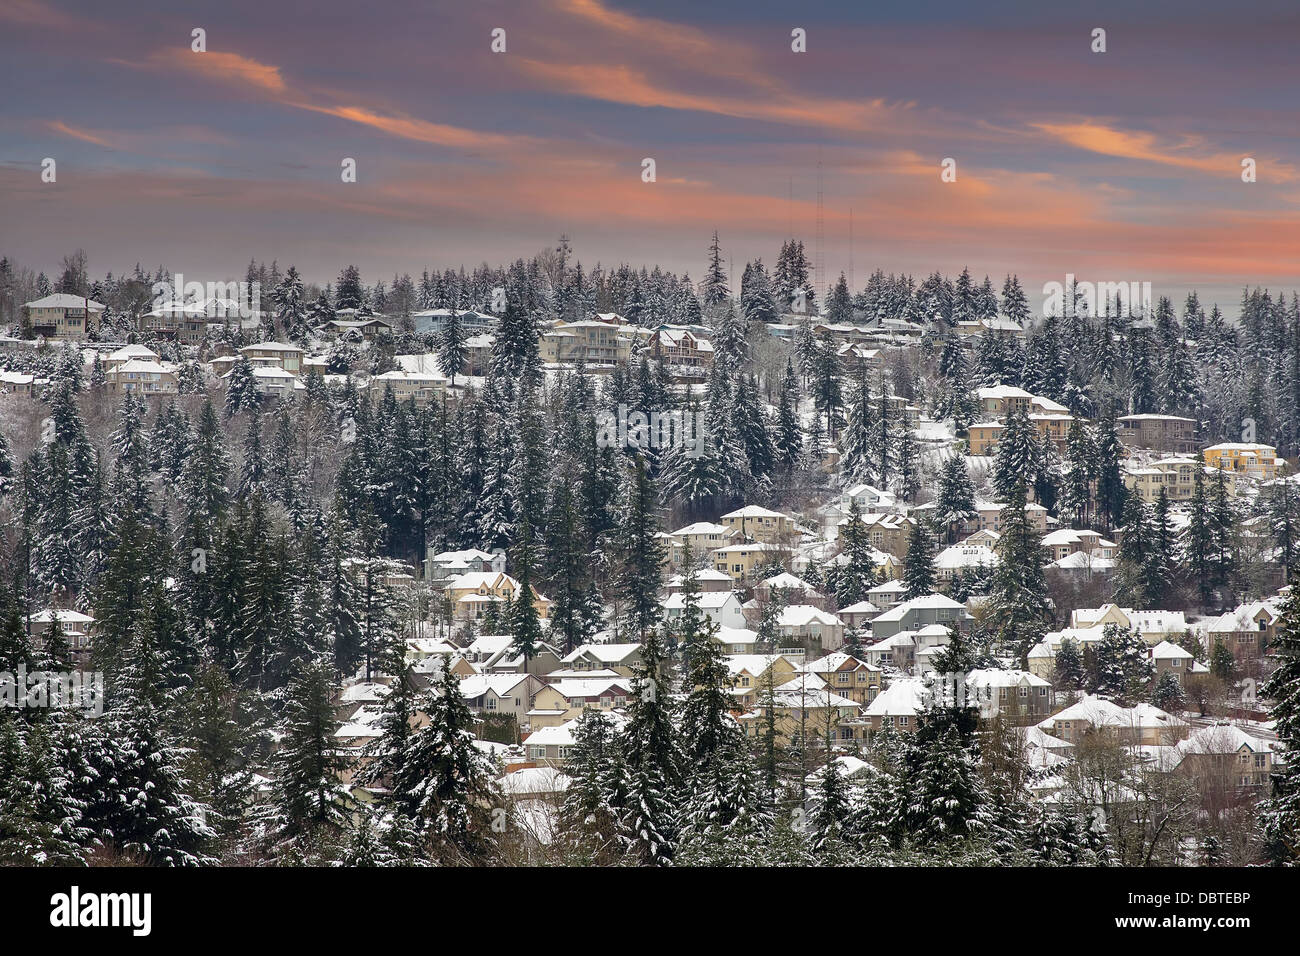 Winter Snow Scene in North America Suburbs Neighborhood Nestled Amongst Trees at Sunset Stock Photo